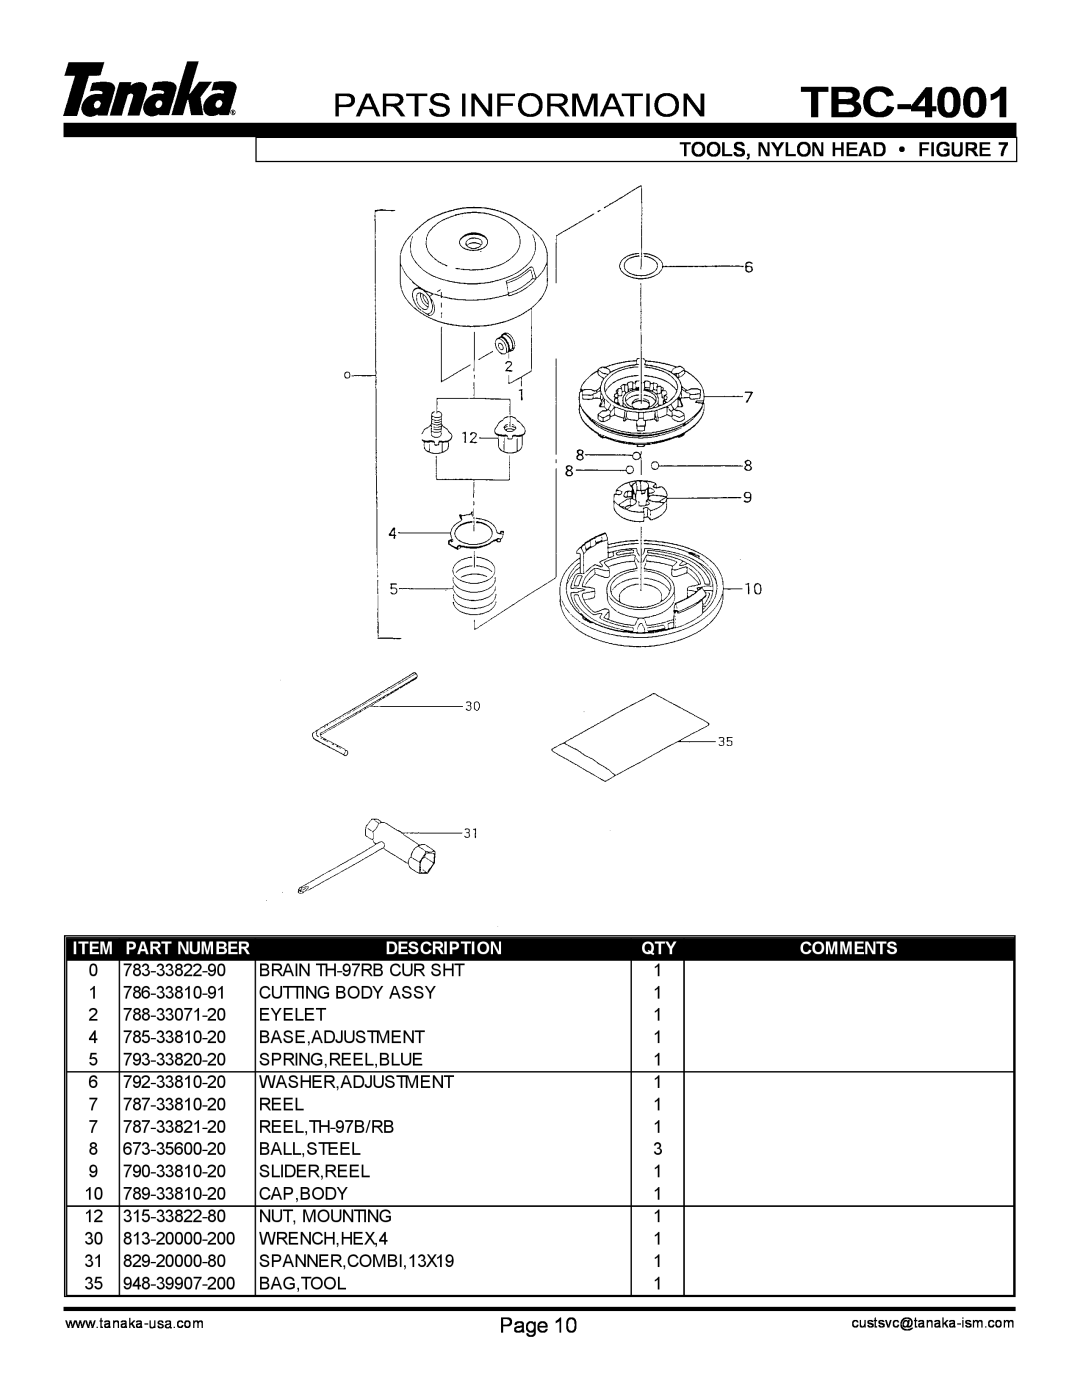 Tanaka manual PARTS INFORMATION TBC-4001, Page, Tools, Nylon Head Figure, Part Number, Description, Comments 